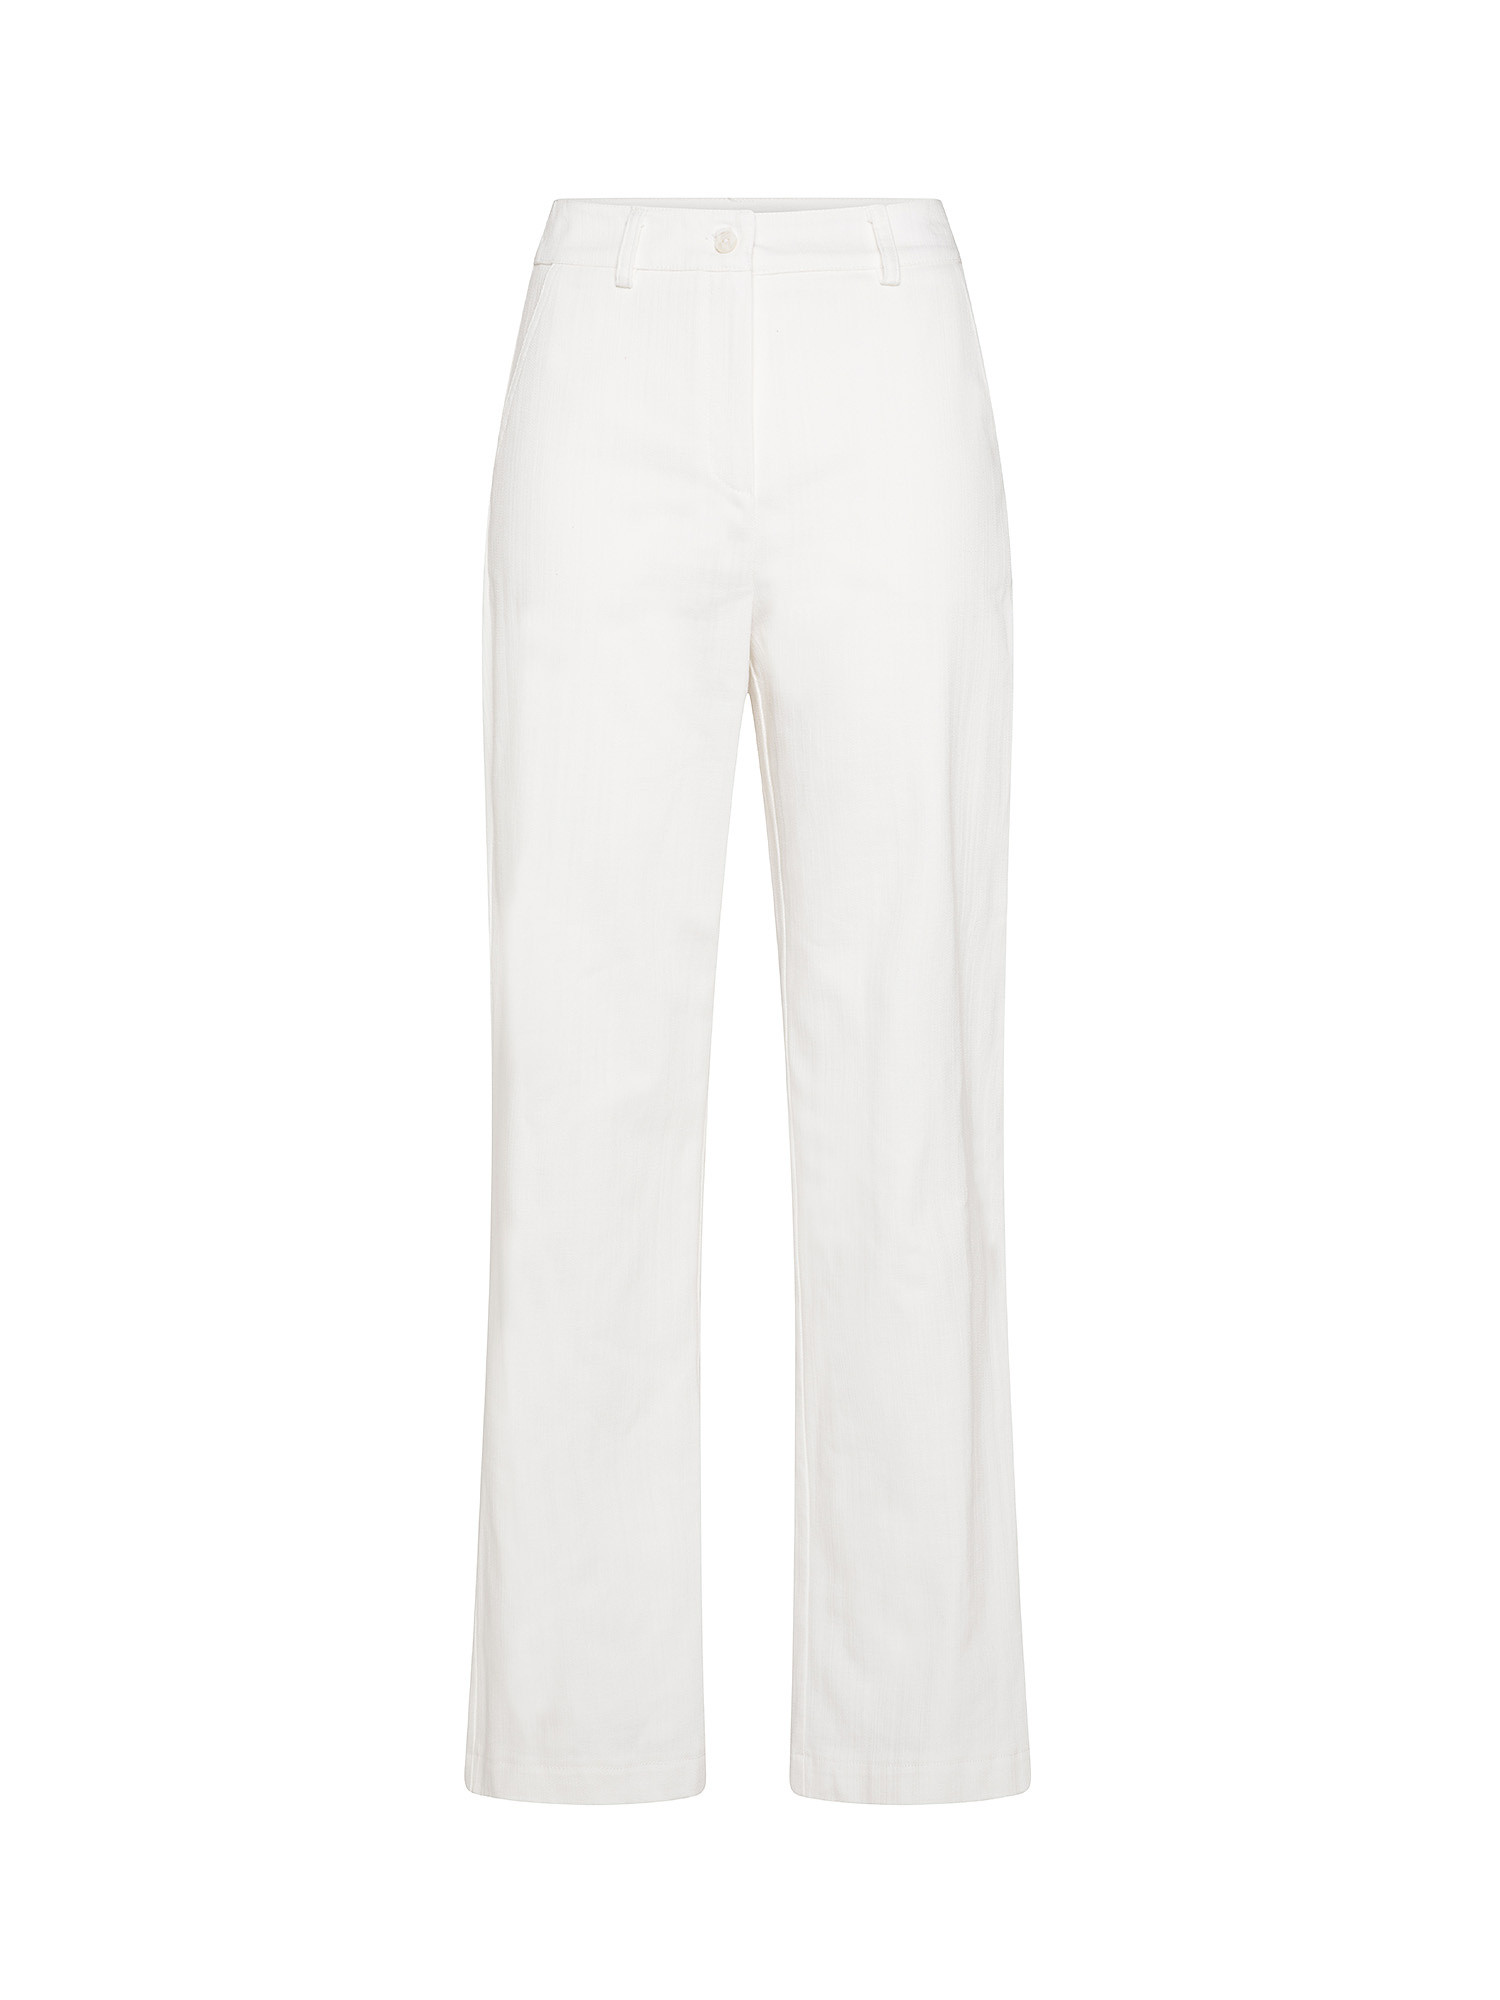 Pantalone jeans, Bianco, large image number 0